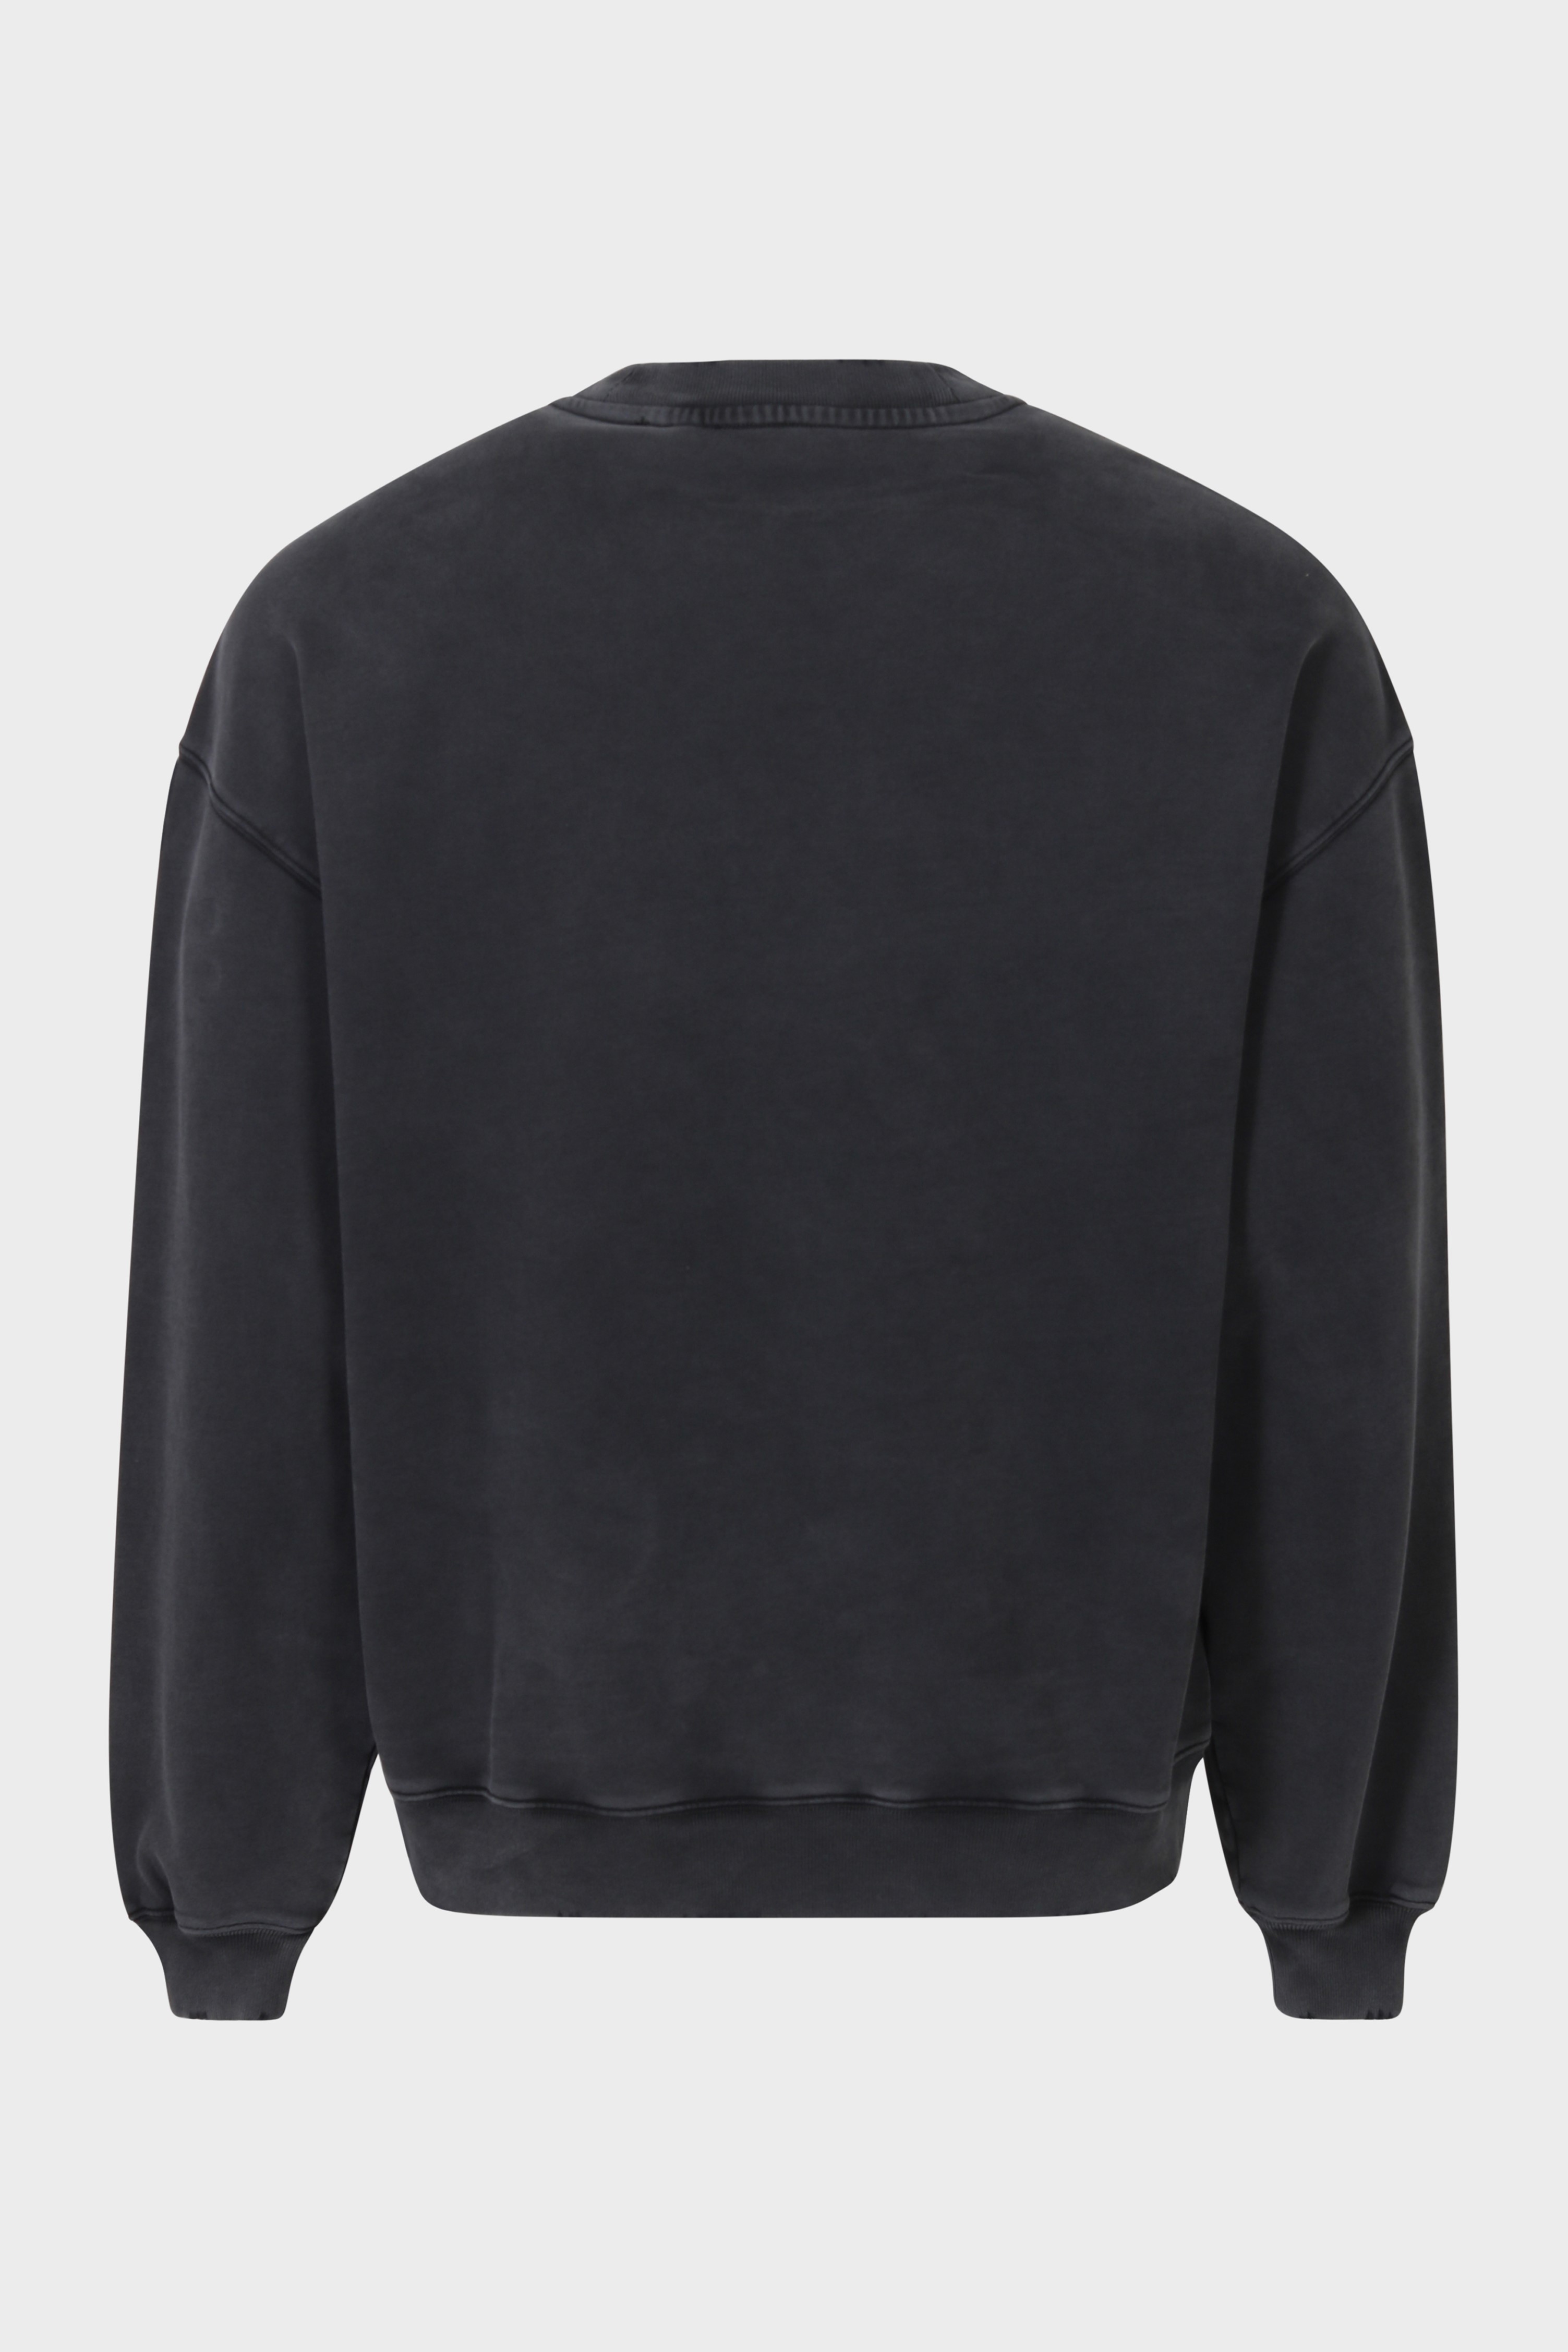 AXEL ARIGATO Wes Distrezzed Sweatshirt in Washed Black L